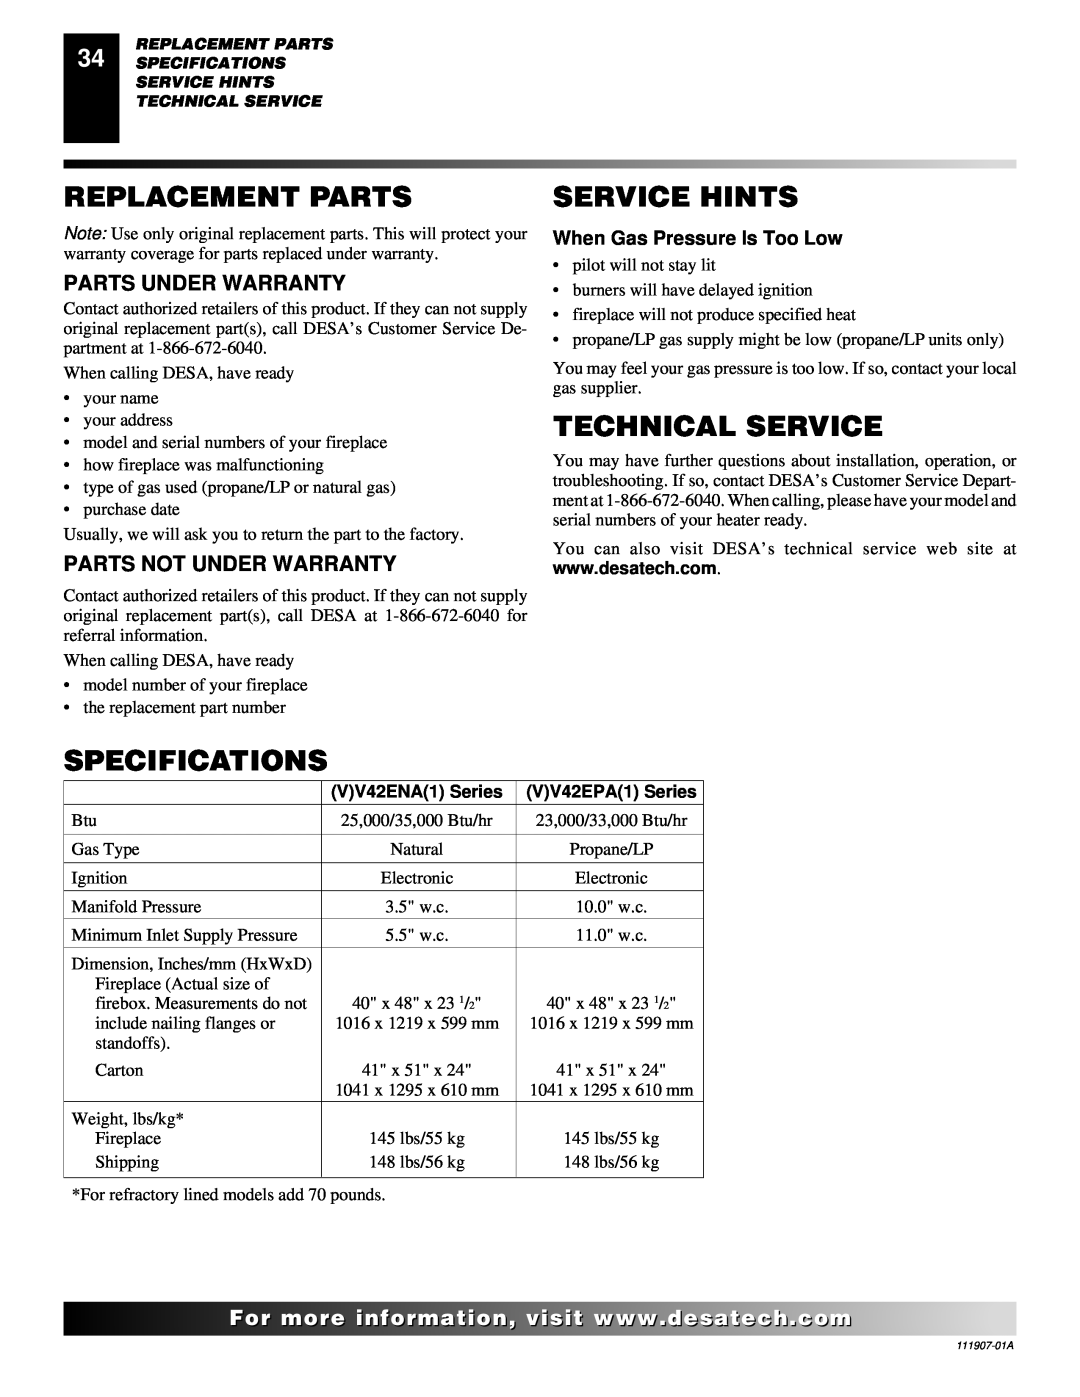 Desa (V)V42ENA(1), (V)V42EPA(1) Replacement Parts, Service Hints, Technical Service, Specifications, Parts Under Warranty 